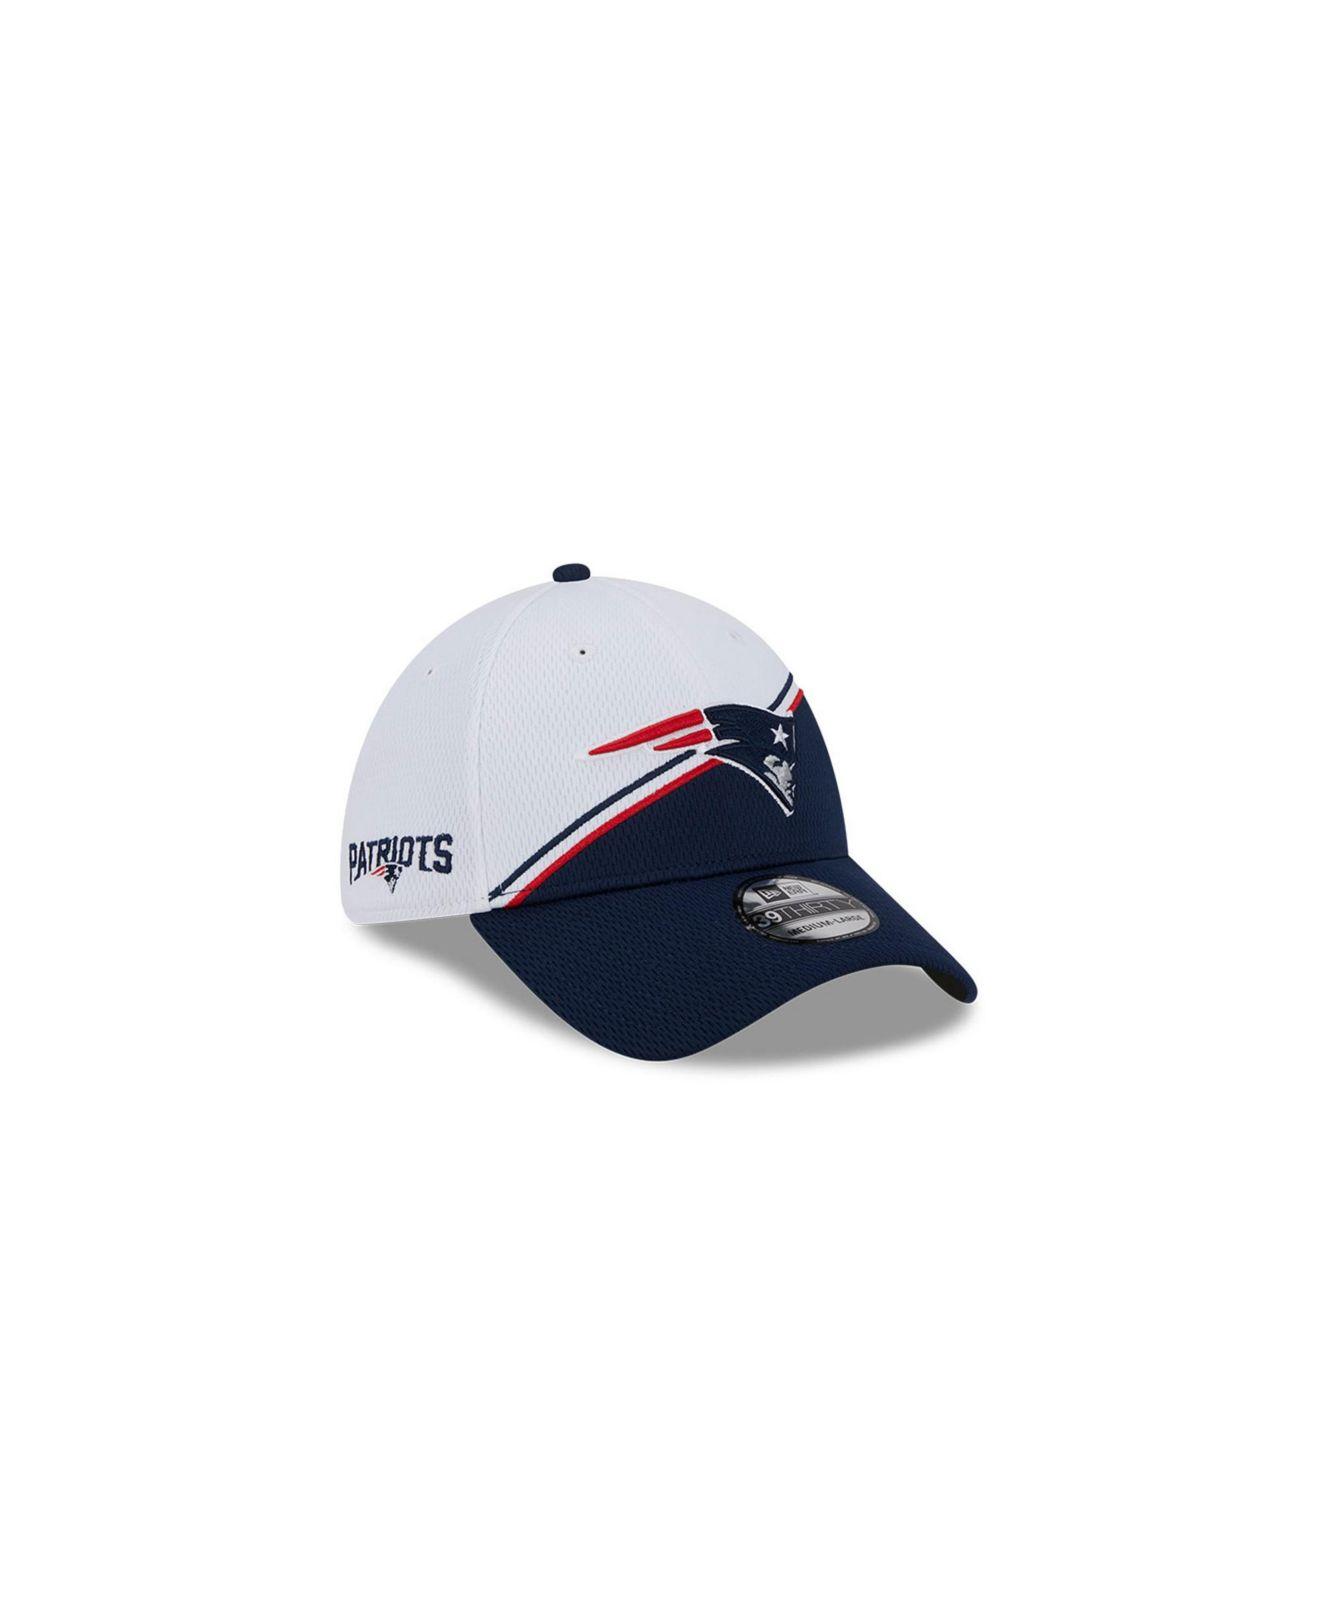 patriots sideline hat